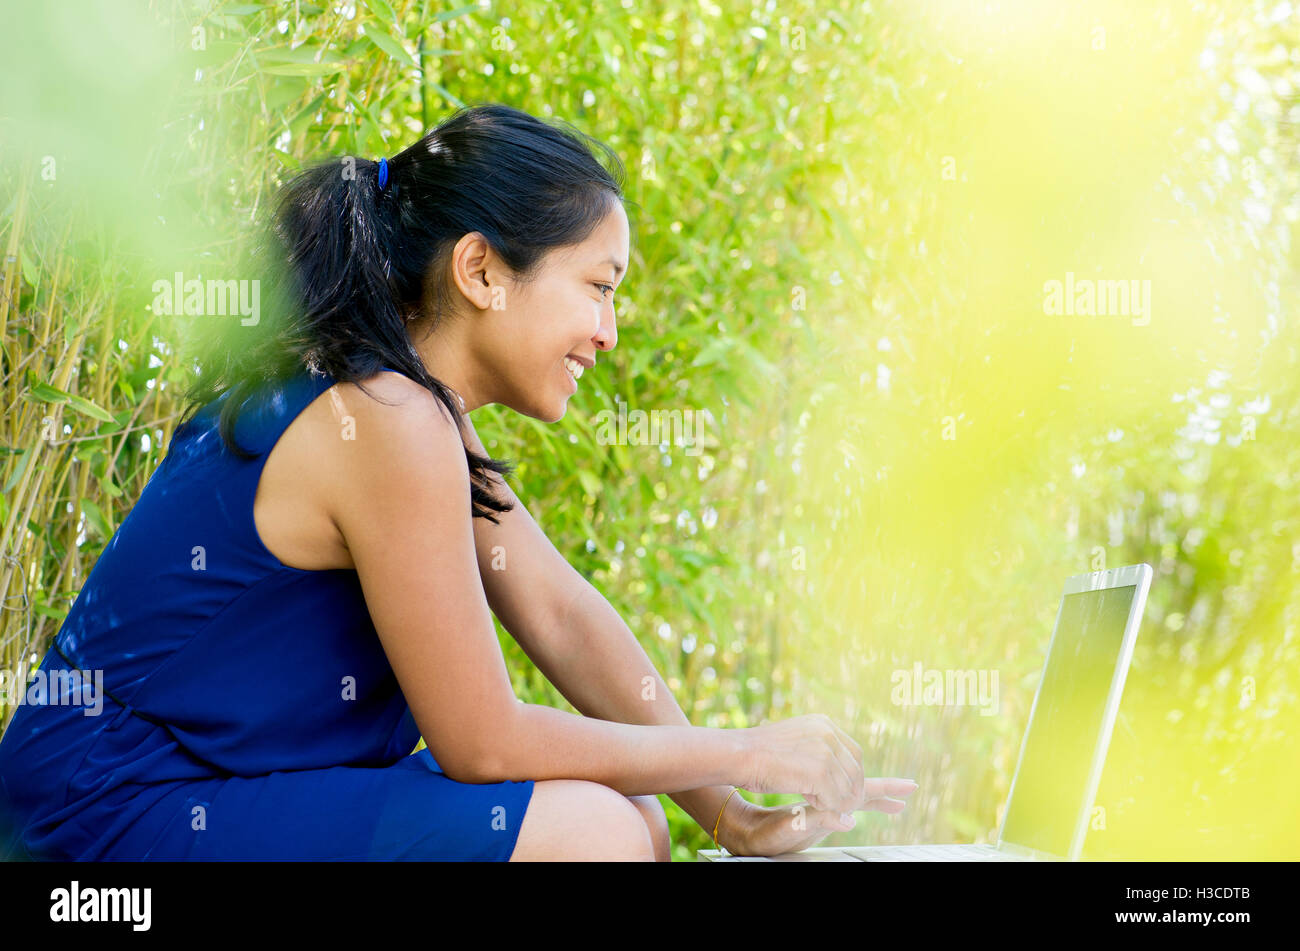 Woman using laptop computer outdoors Stock Photo